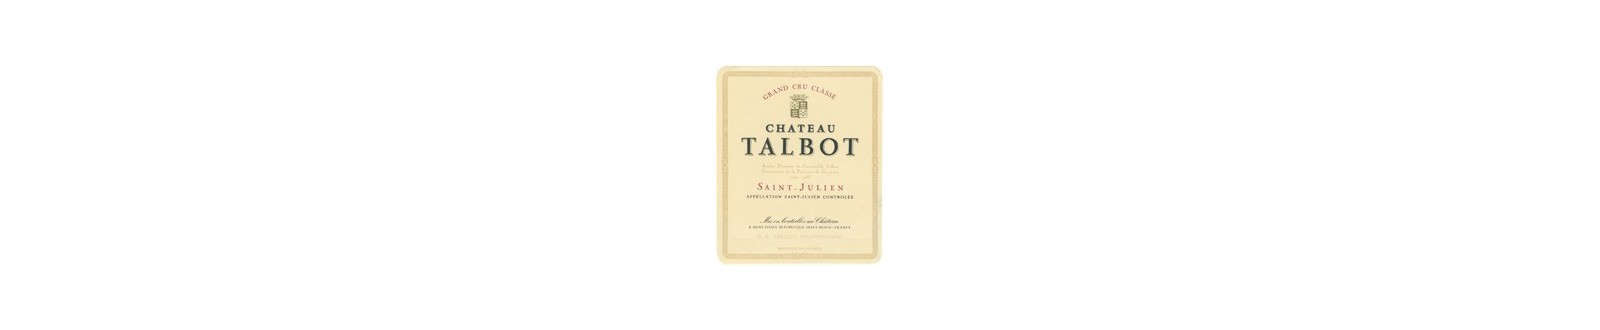 Vin(s) du Château Talbot